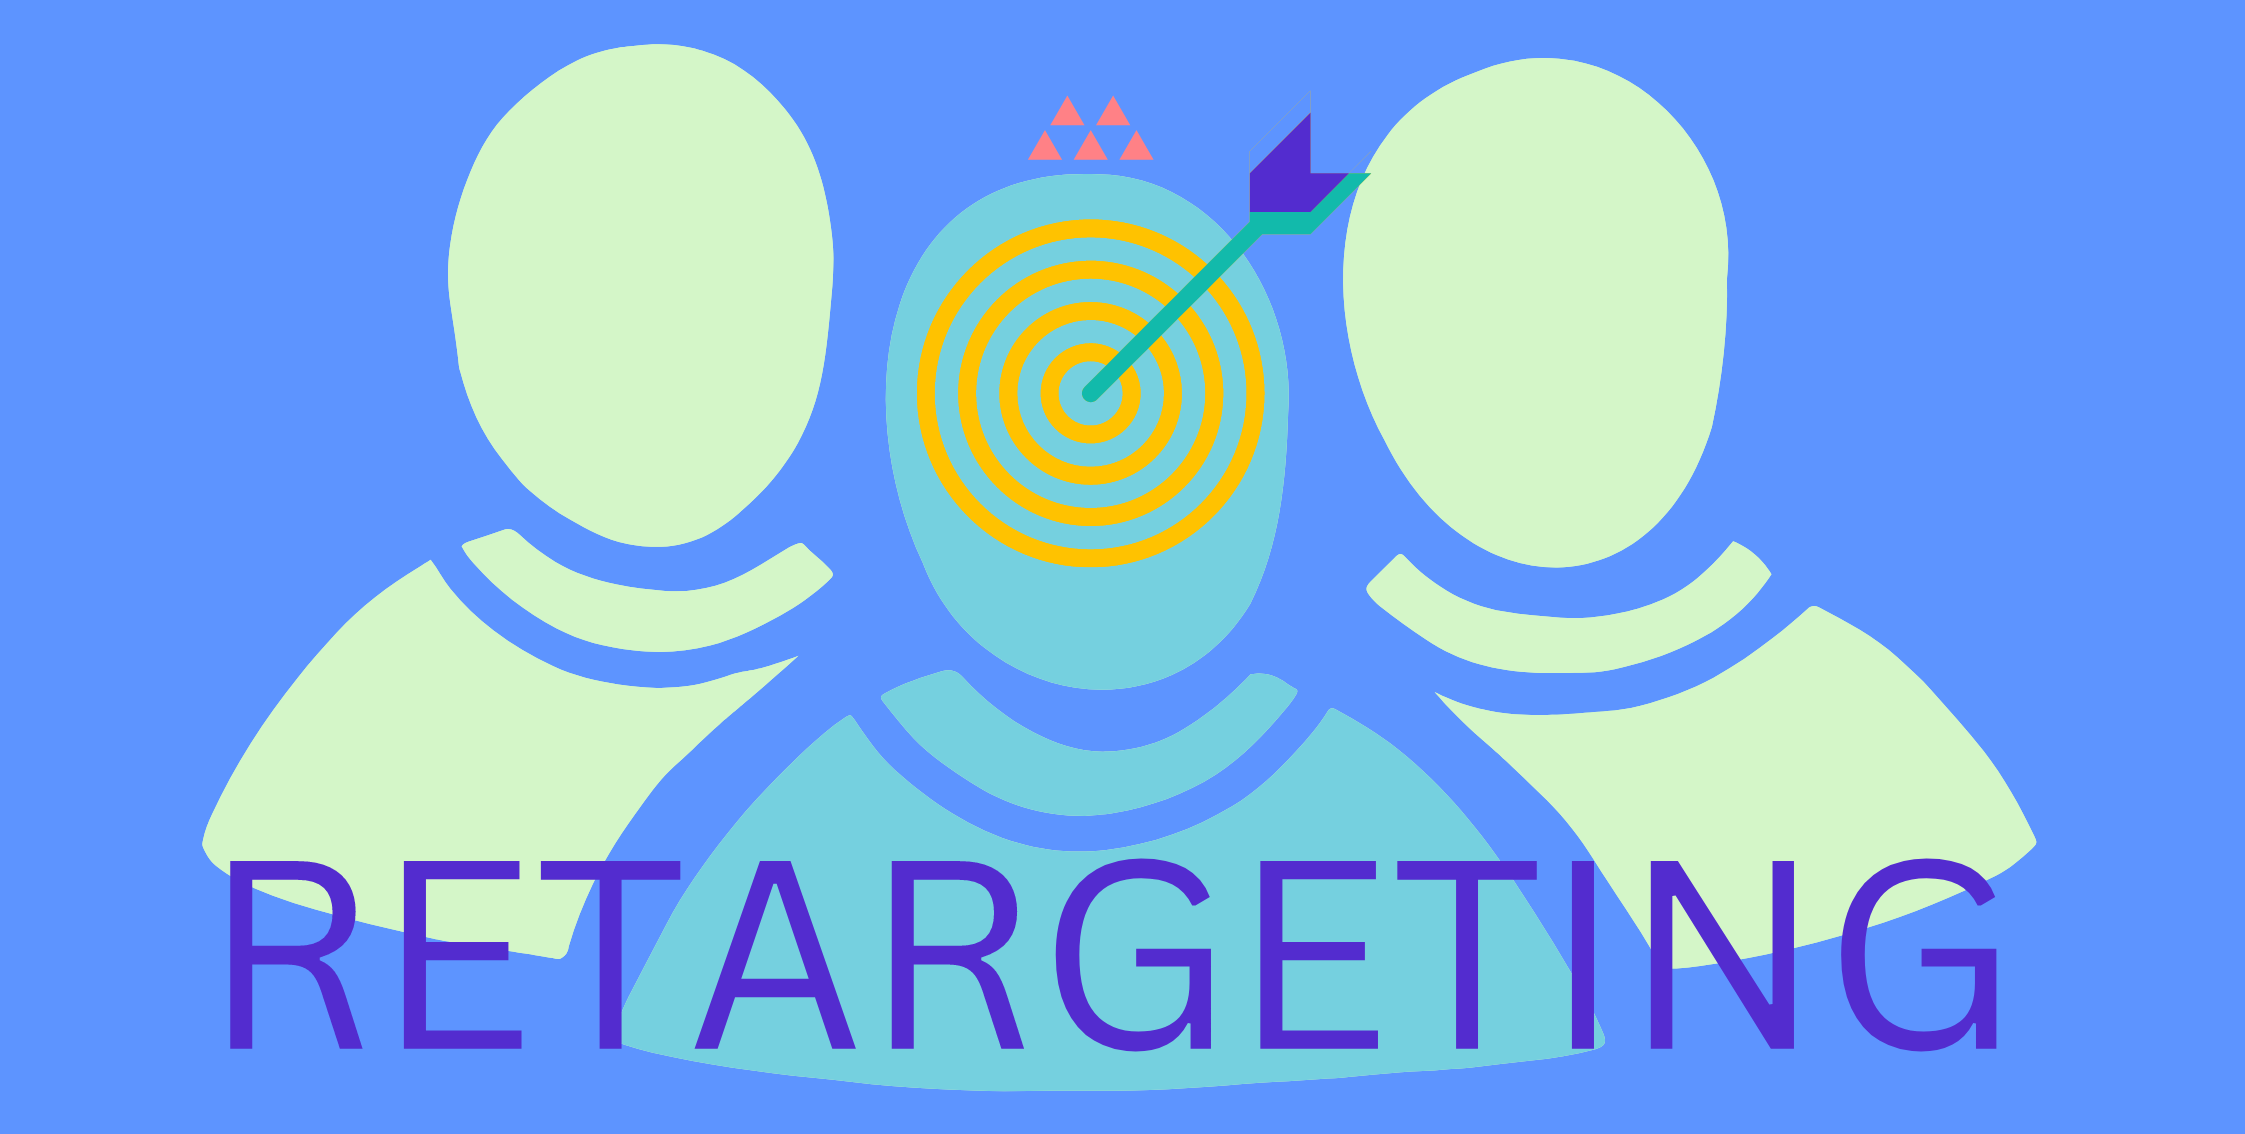 What Is Retargeting In Digital Marketing? How Does It Work?